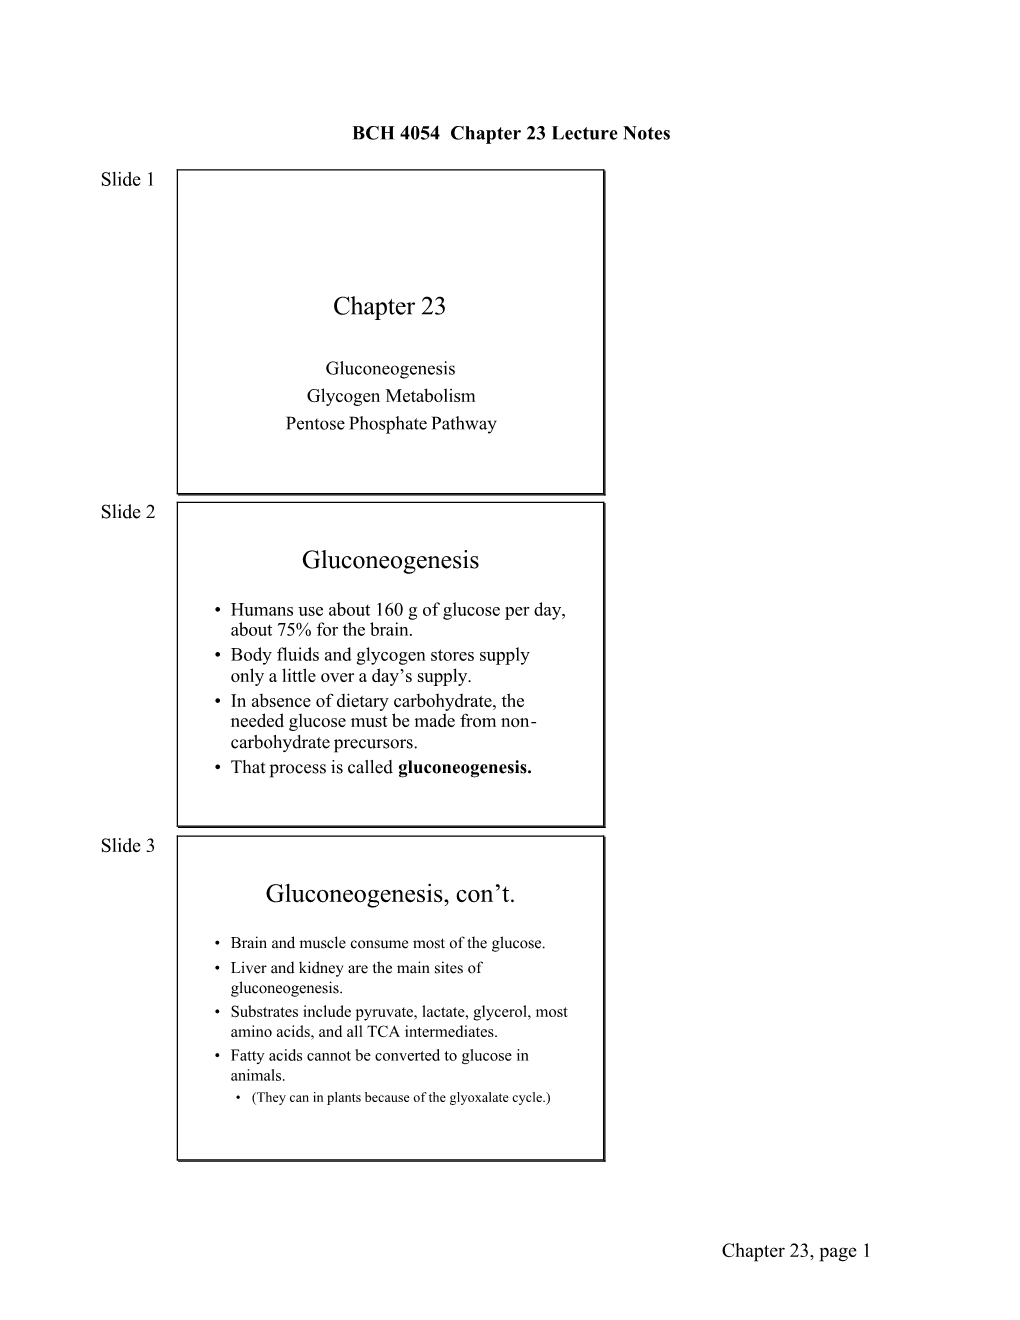 Chapter 23 Gluconeogenesis Gluconeogenesis, Con't